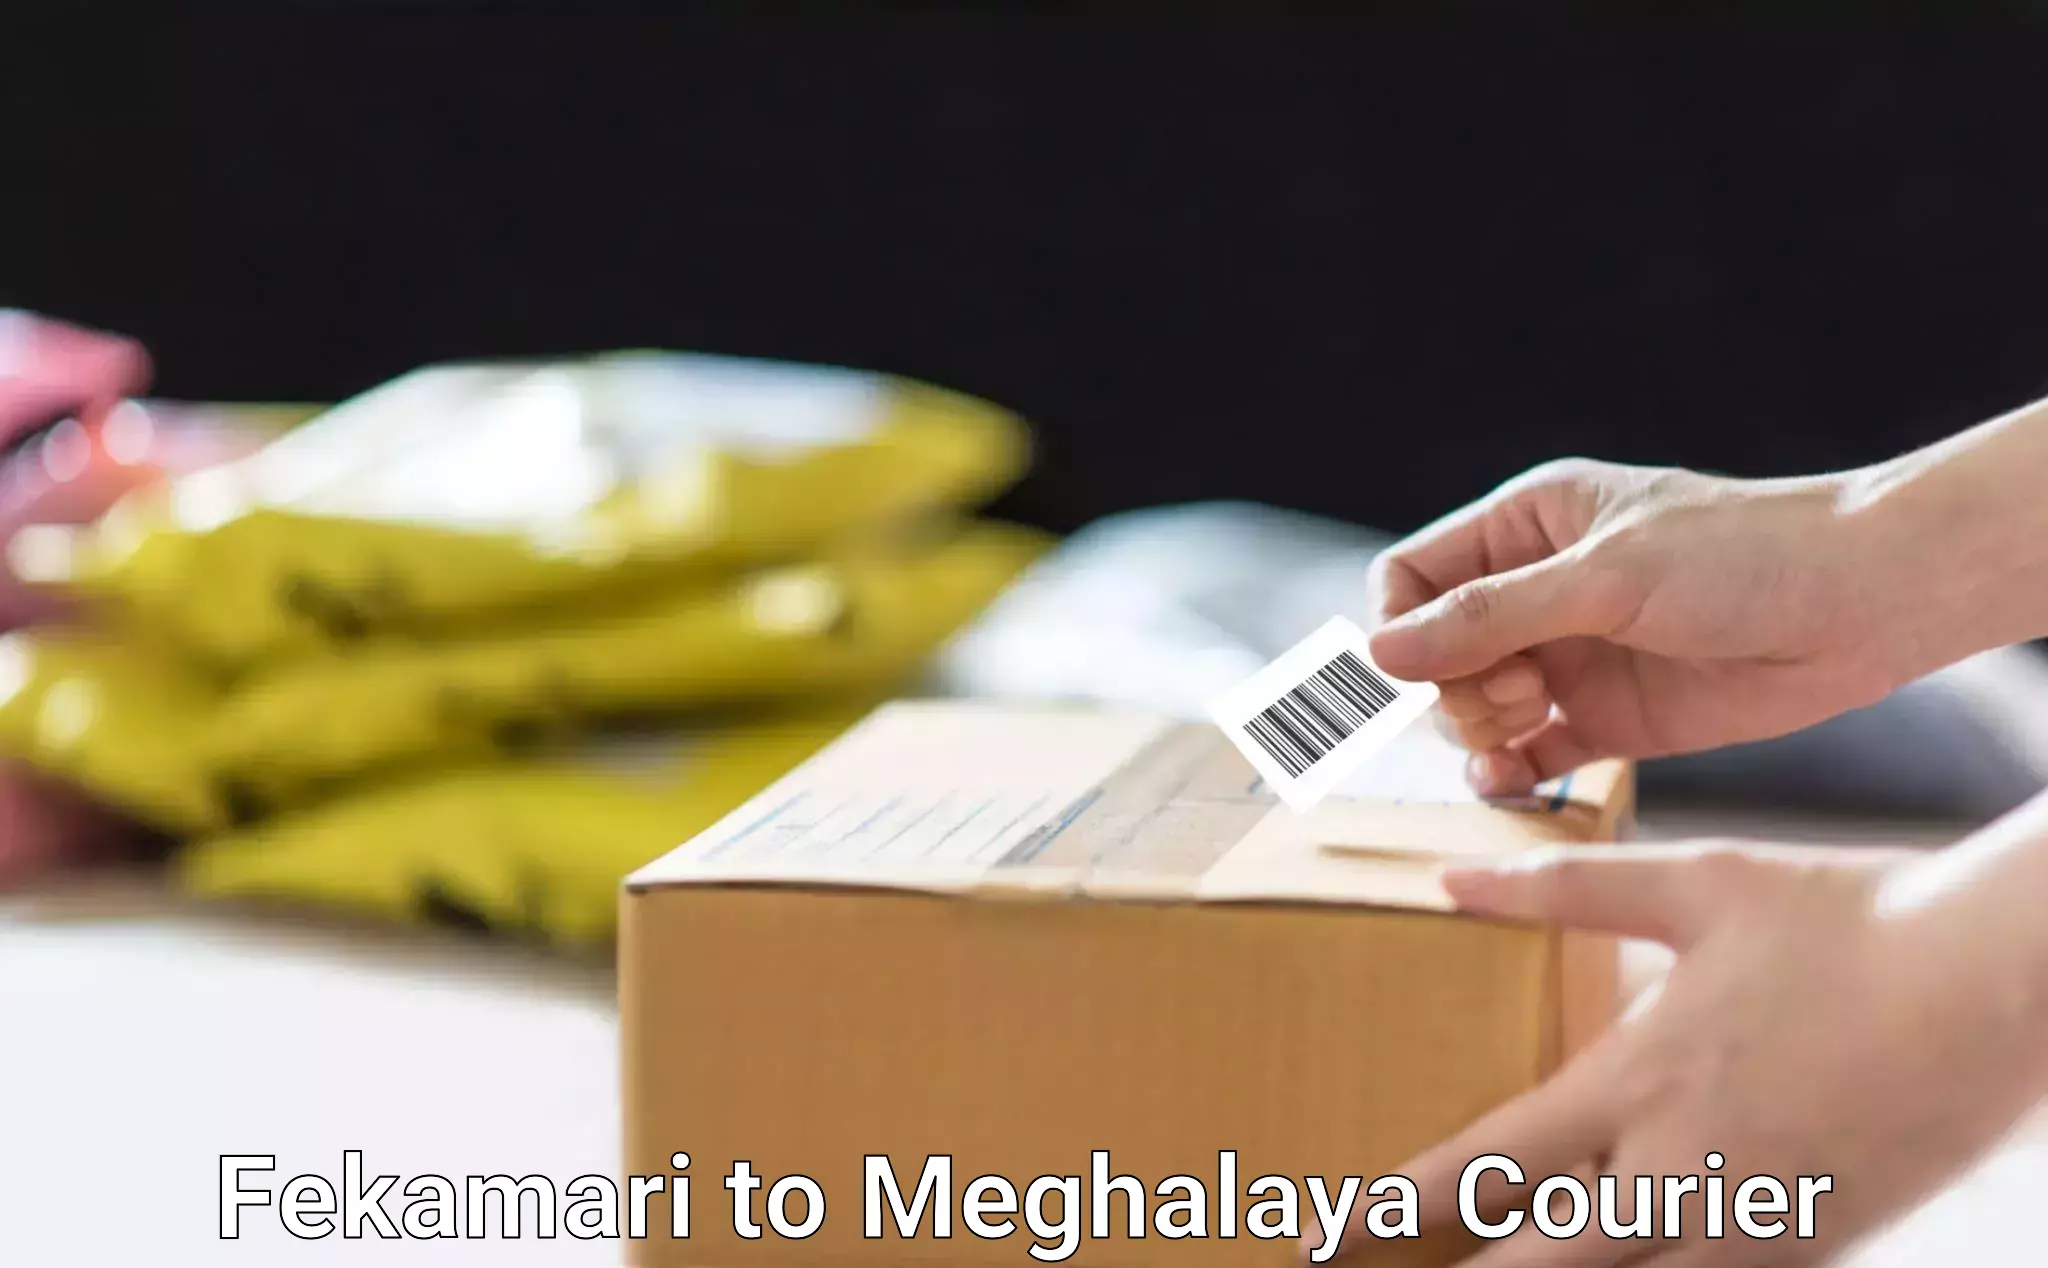 Courier service innovation Fekamari to Meghalaya